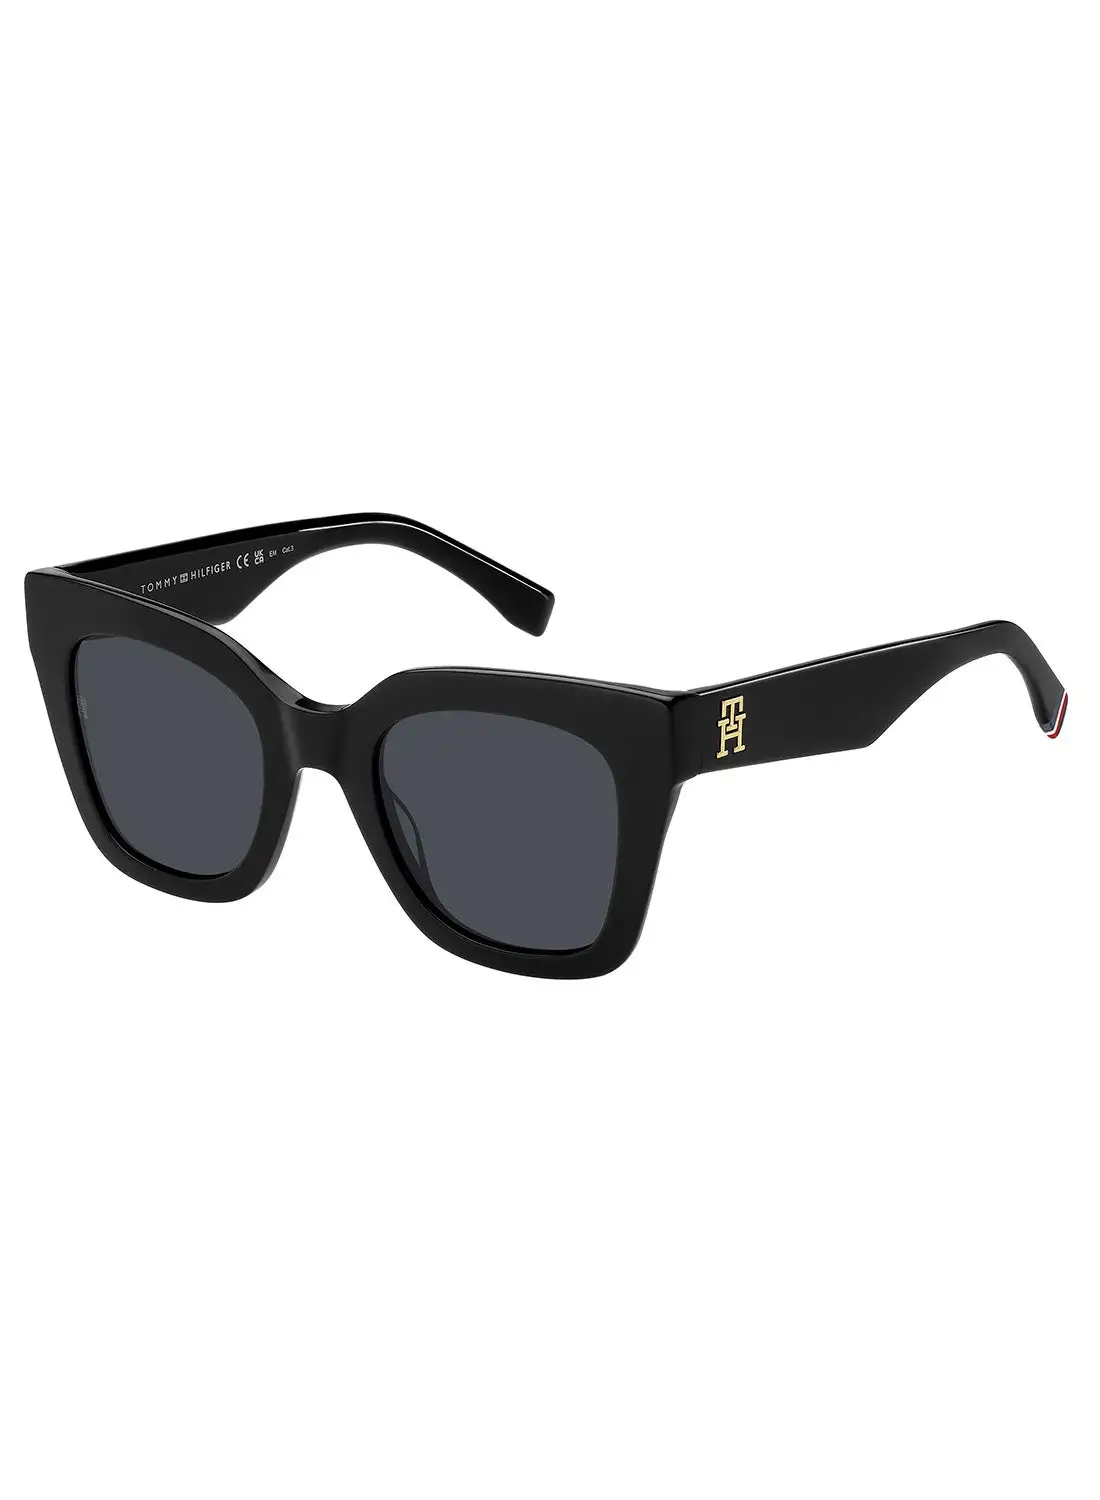 TOMMY HILFIGER Women's UV Protection Square Sunglasses - Th 2051/S Black Millimeter - Lens Size: 50 Mm